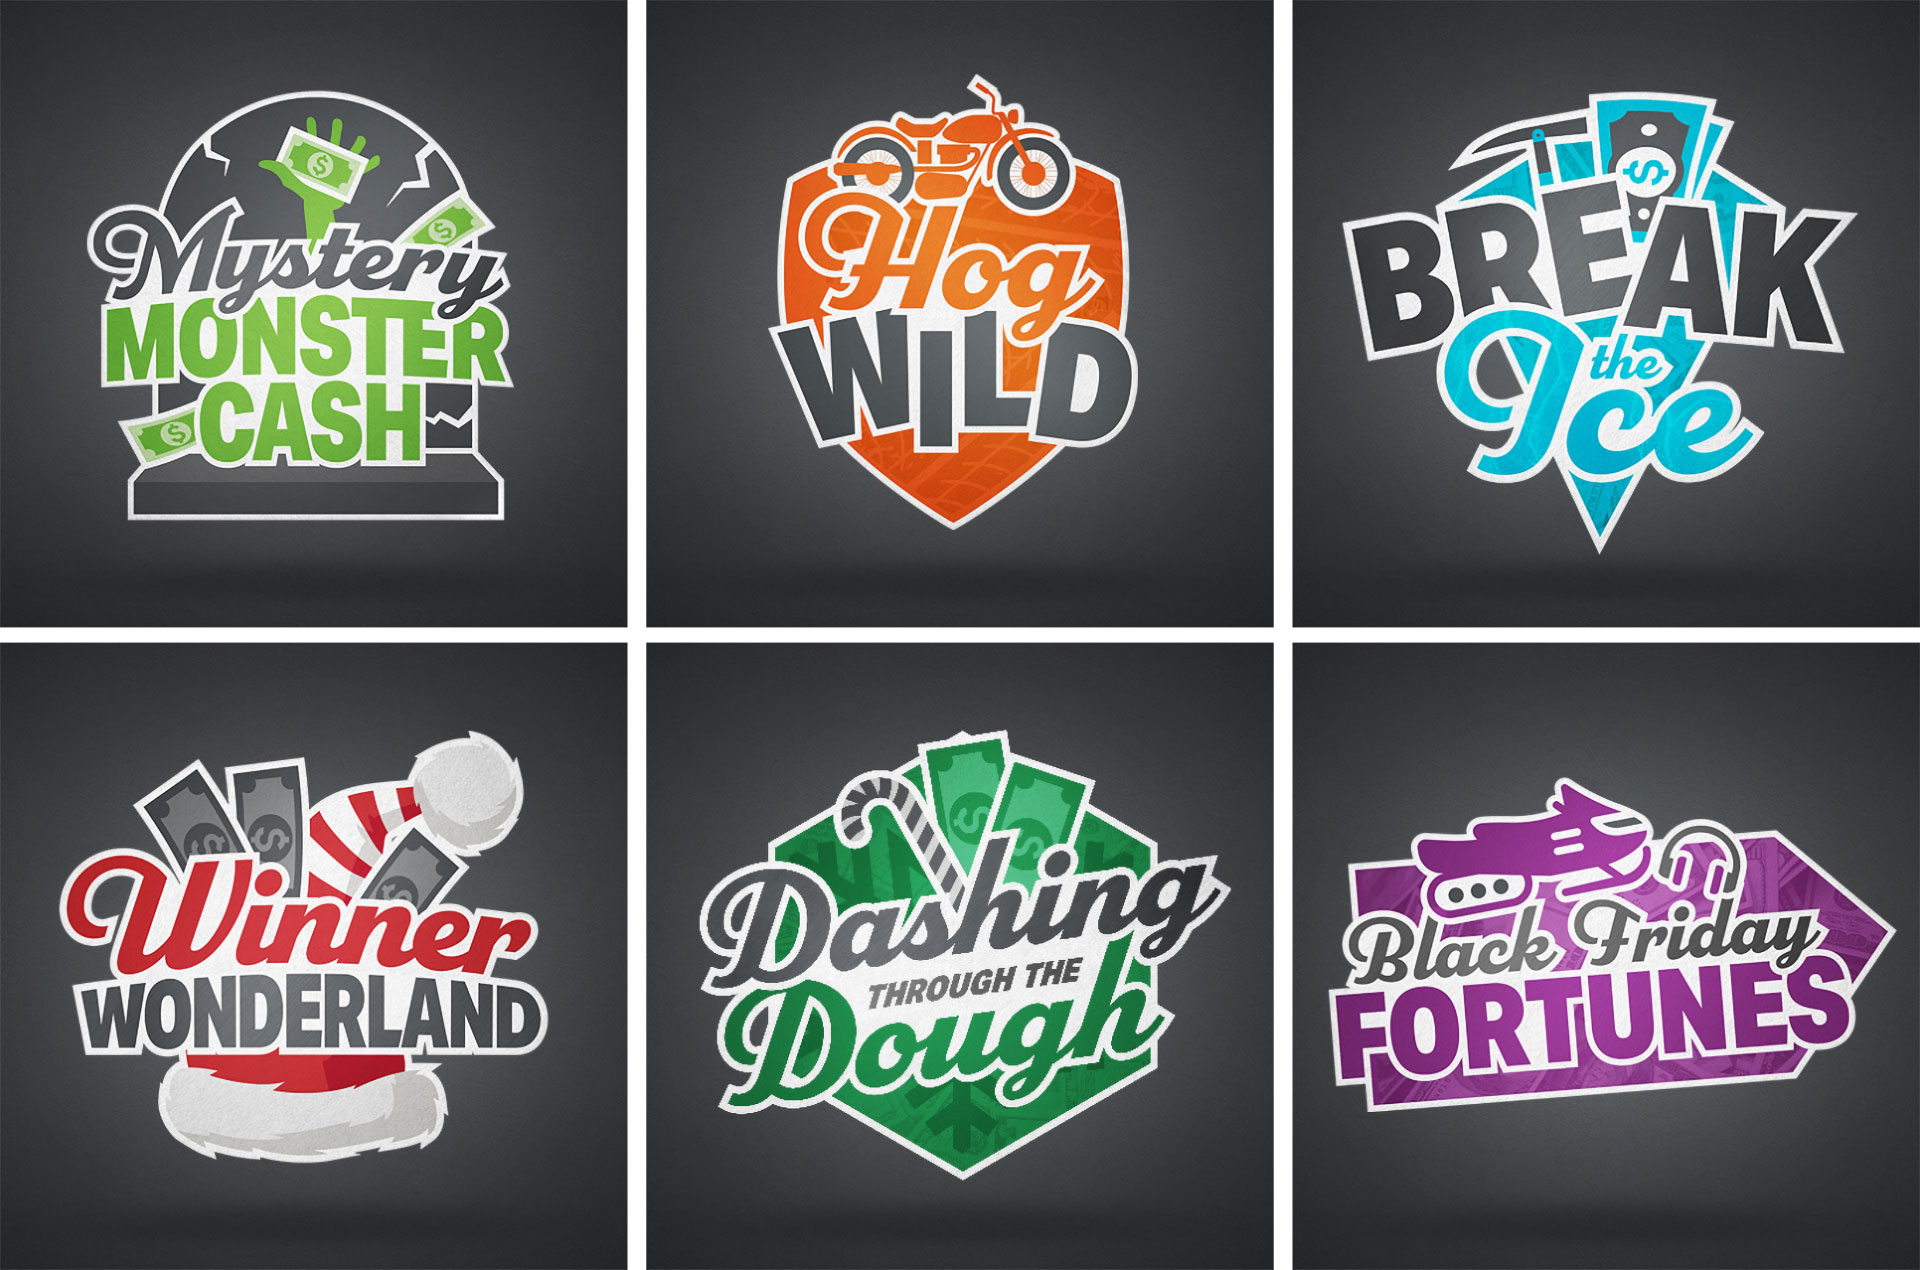 Grand Casino promotion logos.